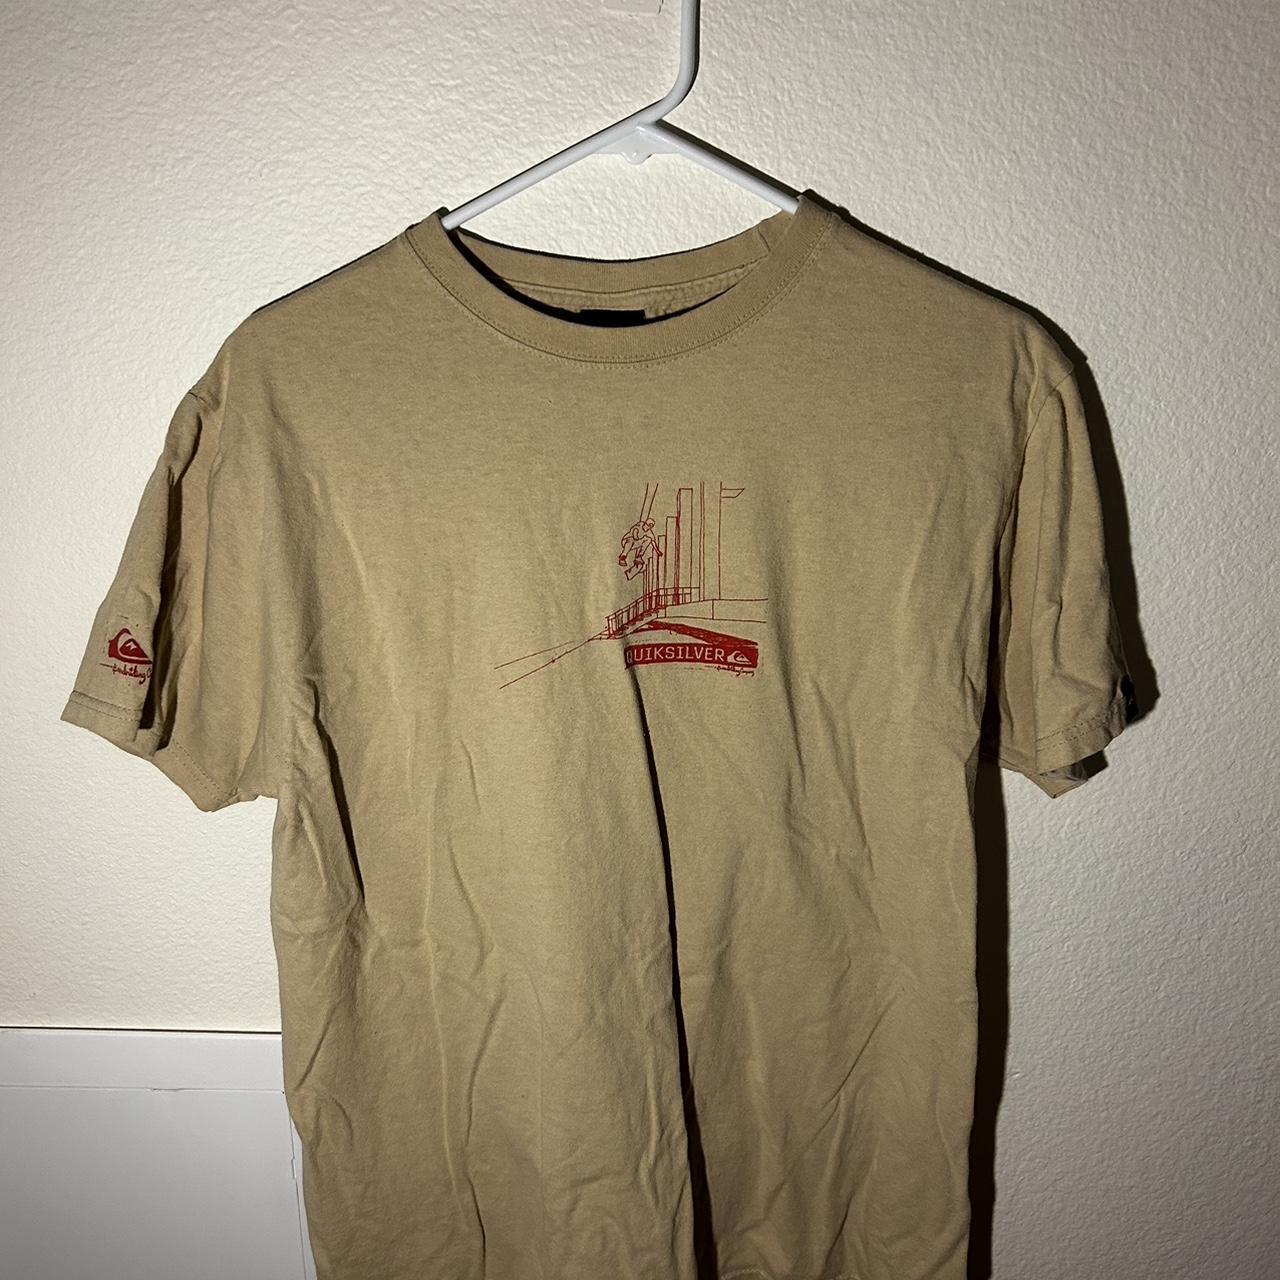 Vintage Quicksilver T-Shirt Pit to pit: 19 Length: 26 - Depop